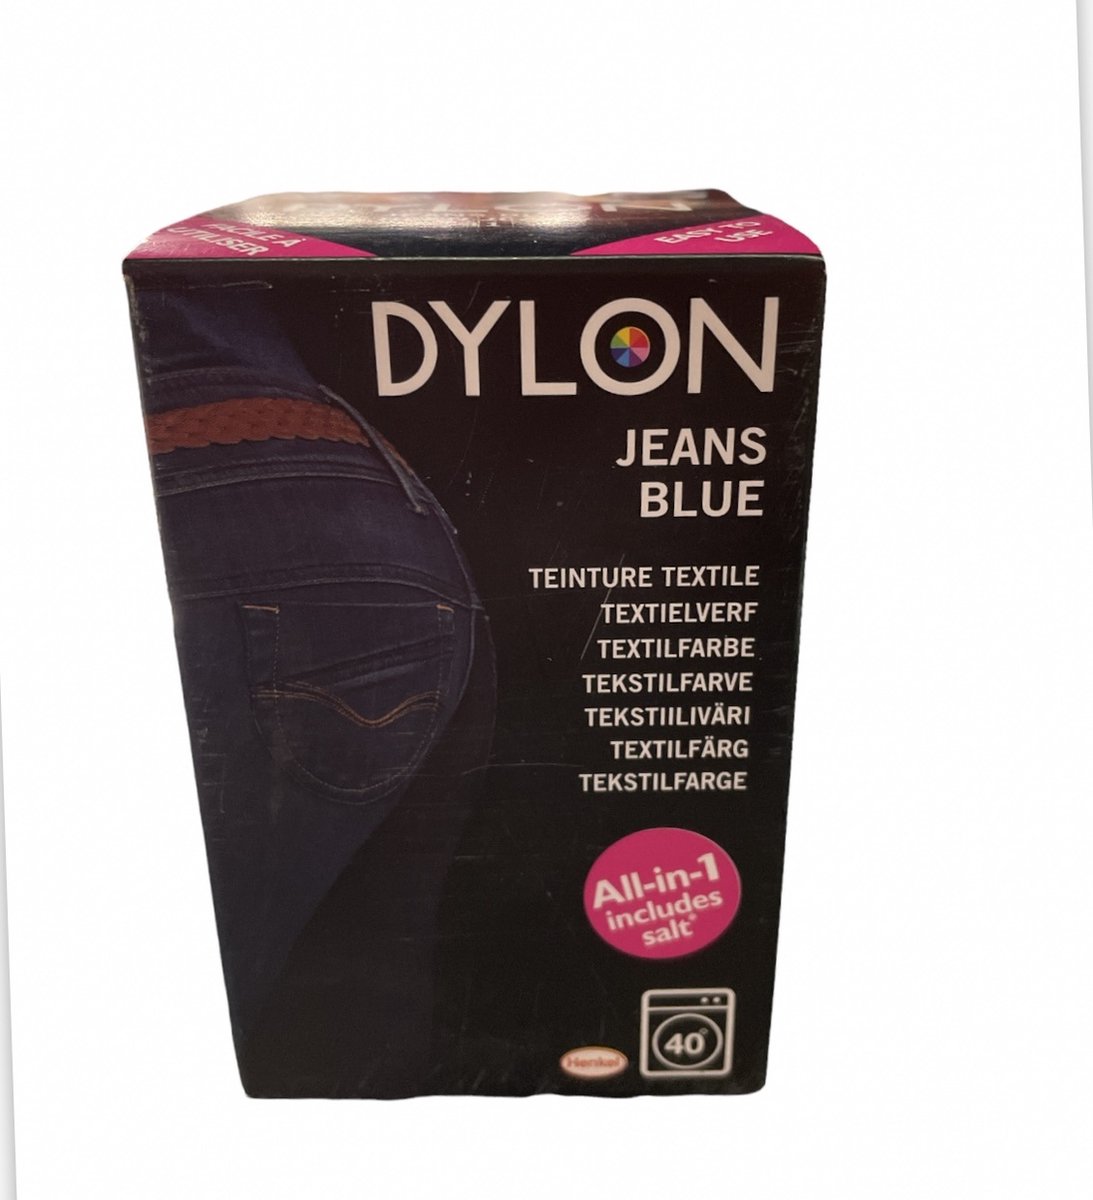 Dylon Textielverf Machineverf - Blue Jeans (41) - 350 gr